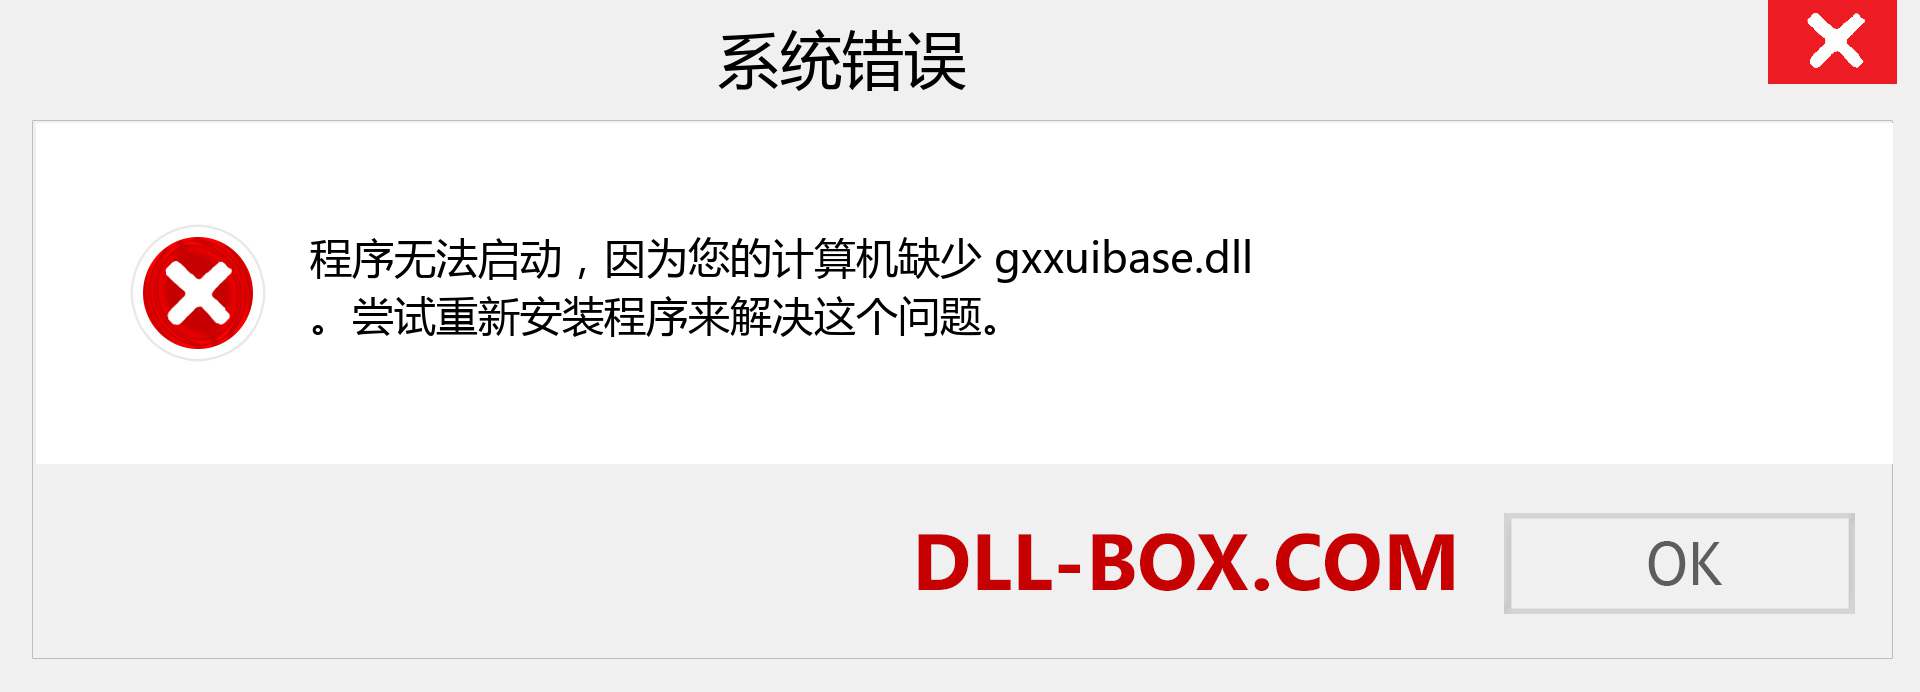 gxxuibase.dll 文件丢失？。 适用于 Windows 7、8、10 的下载 - 修复 Windows、照片、图像上的 gxxuibase dll 丢失错误